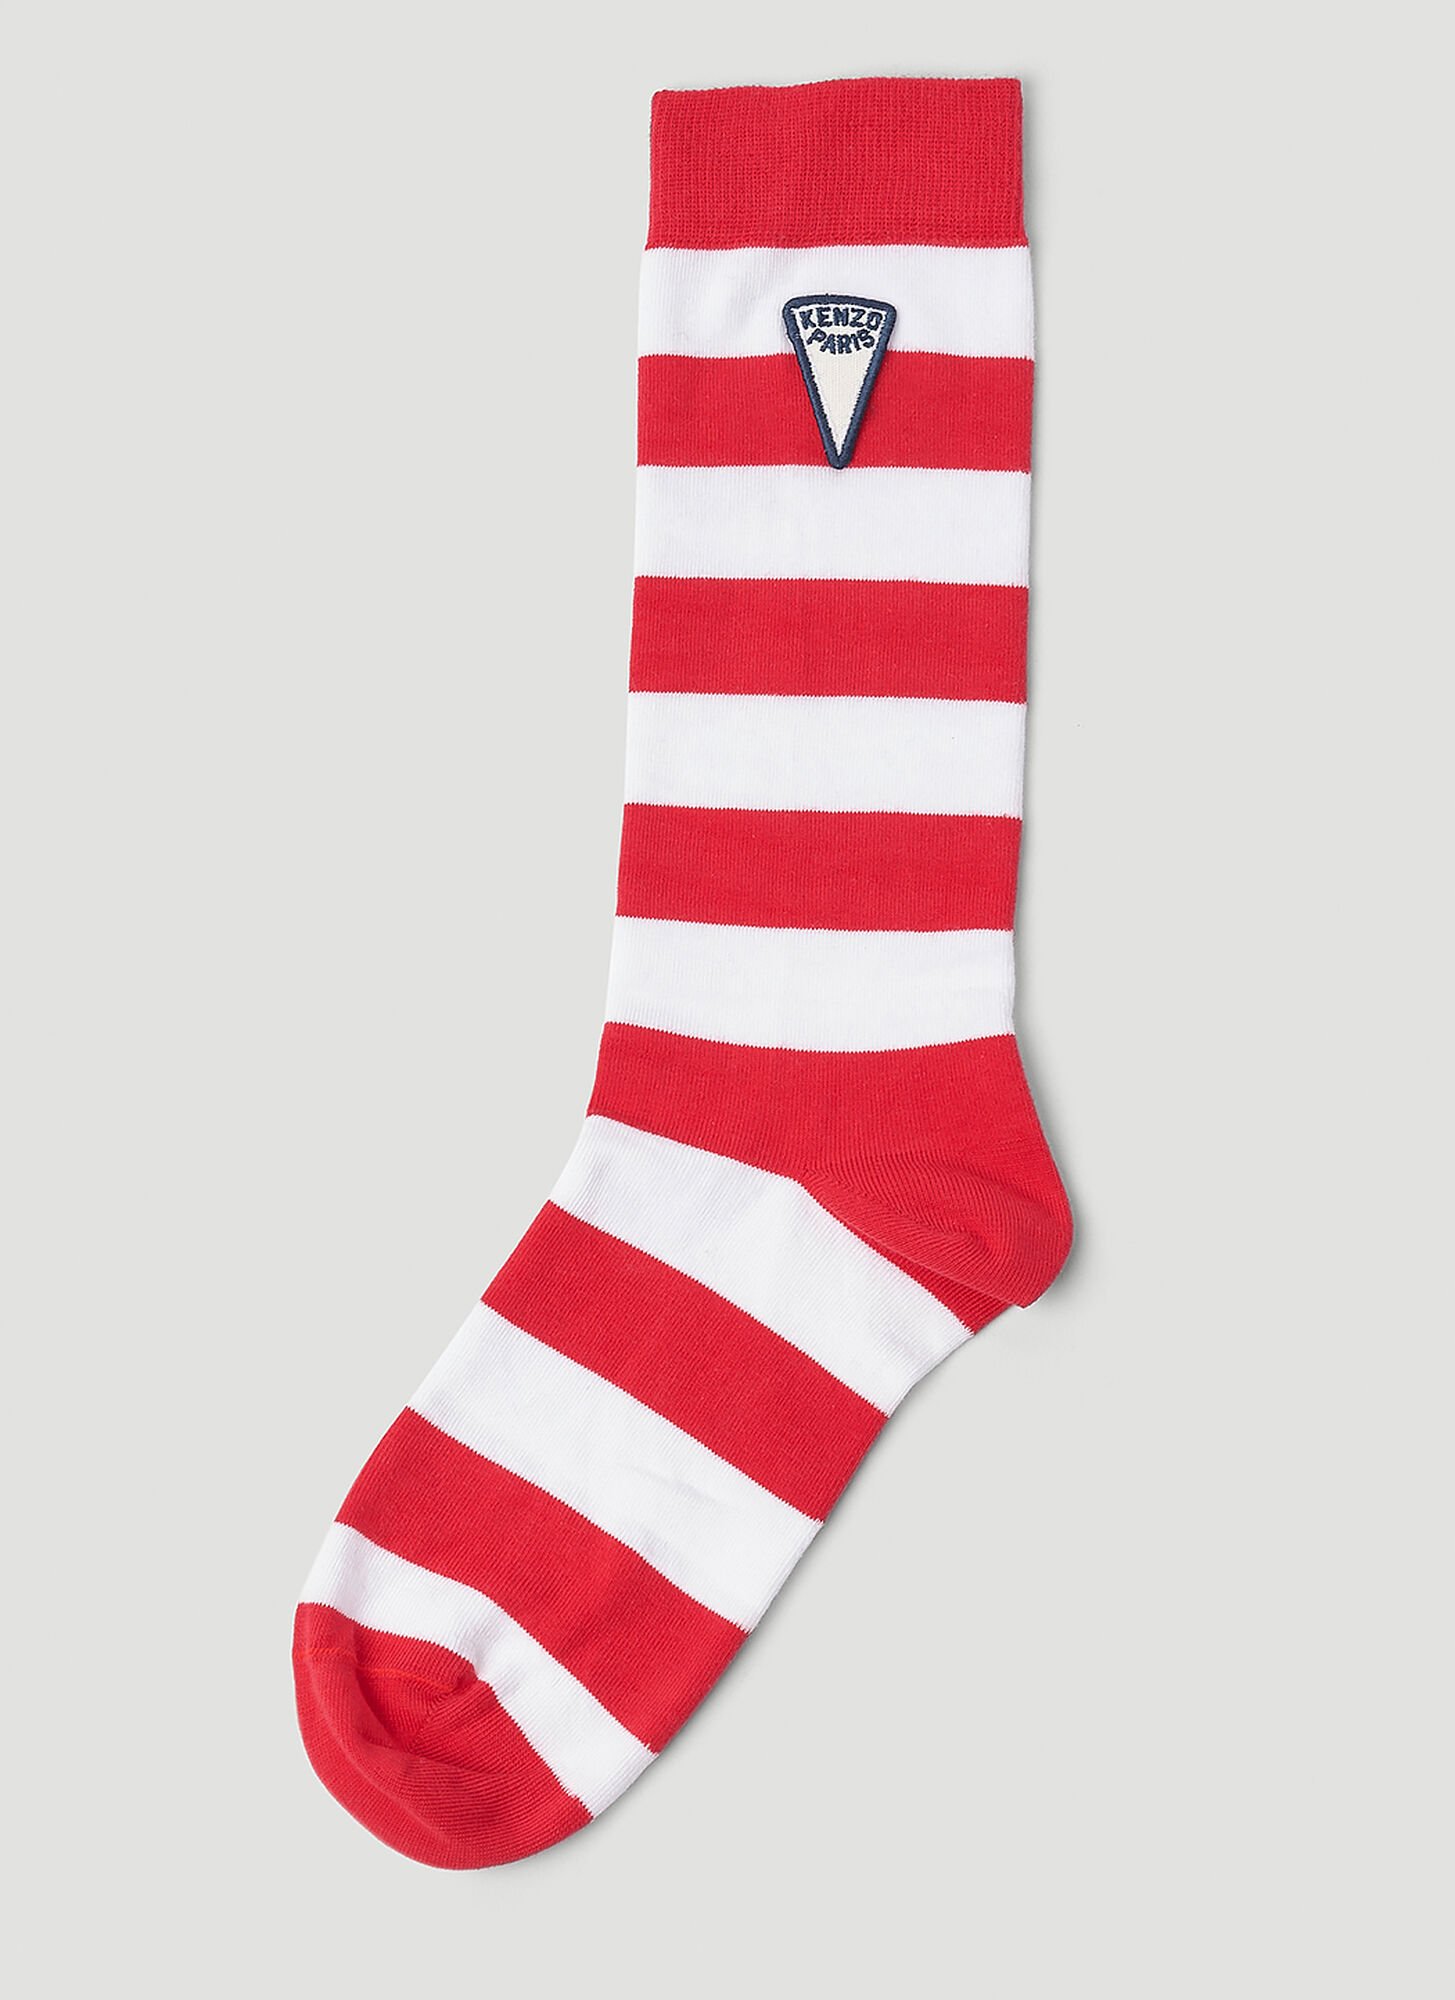 Kenzo Striped Socks Male Red